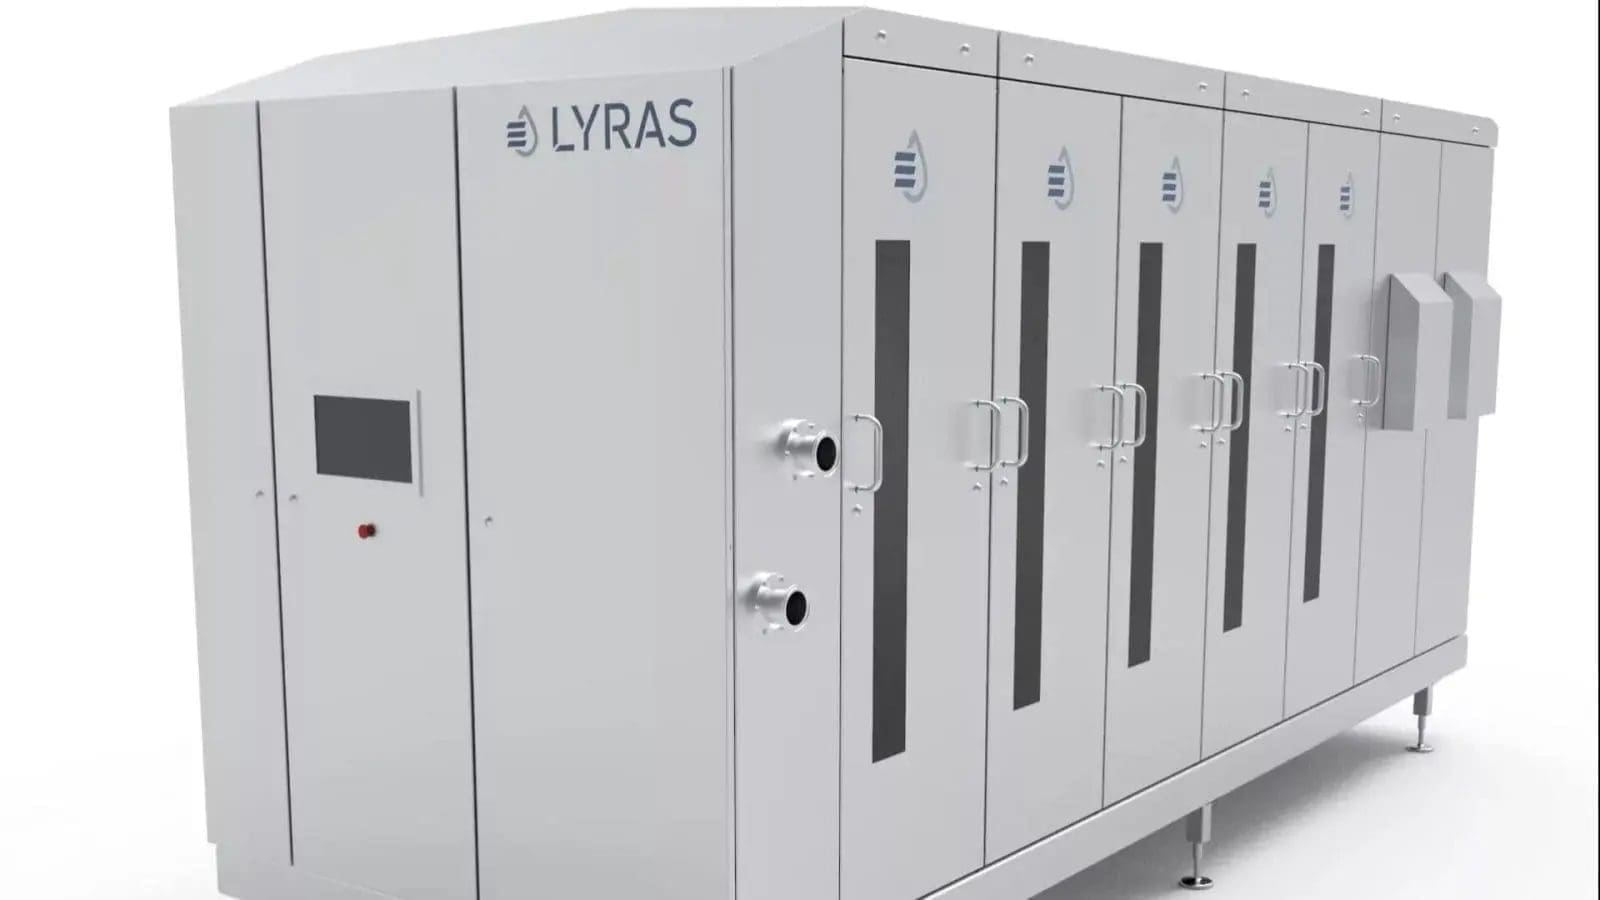 Lyras unveils world’s largest UV treatment unit revolutionizing liquid food processing